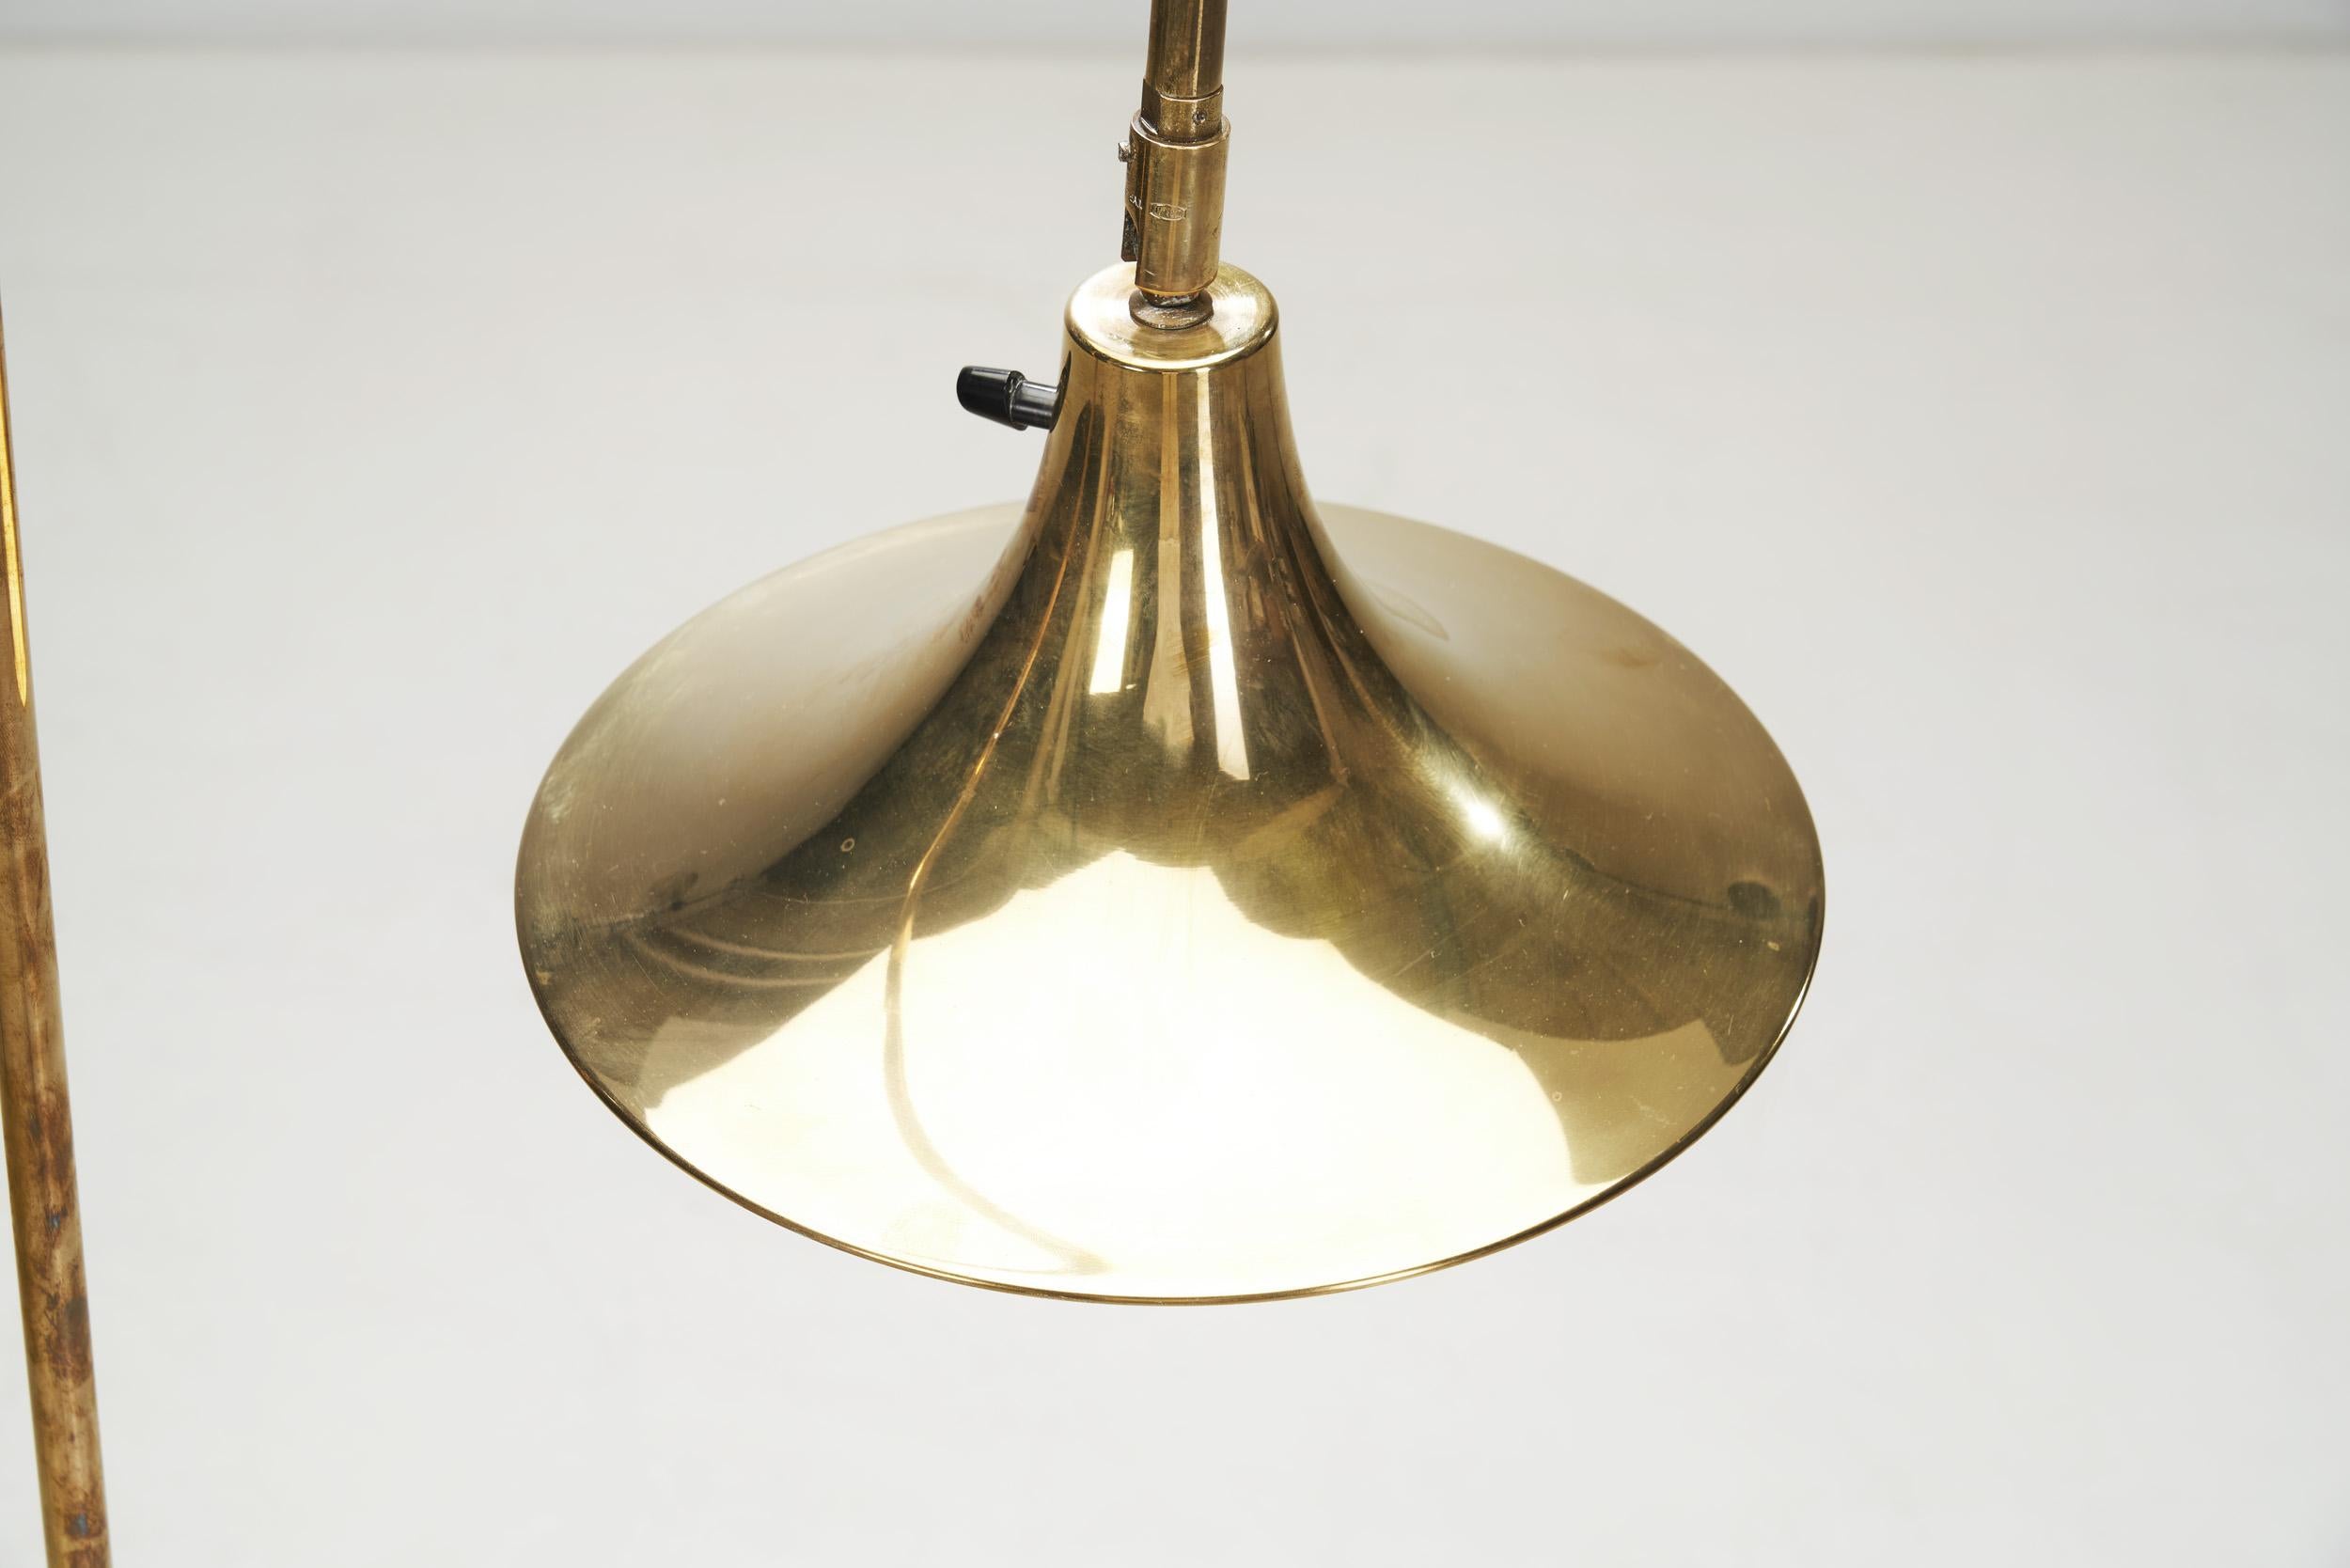 Börje Claes Brass Floor Lamp with Adjustable Shade for Norlett Elit, Sweden 1960 For Sale 7